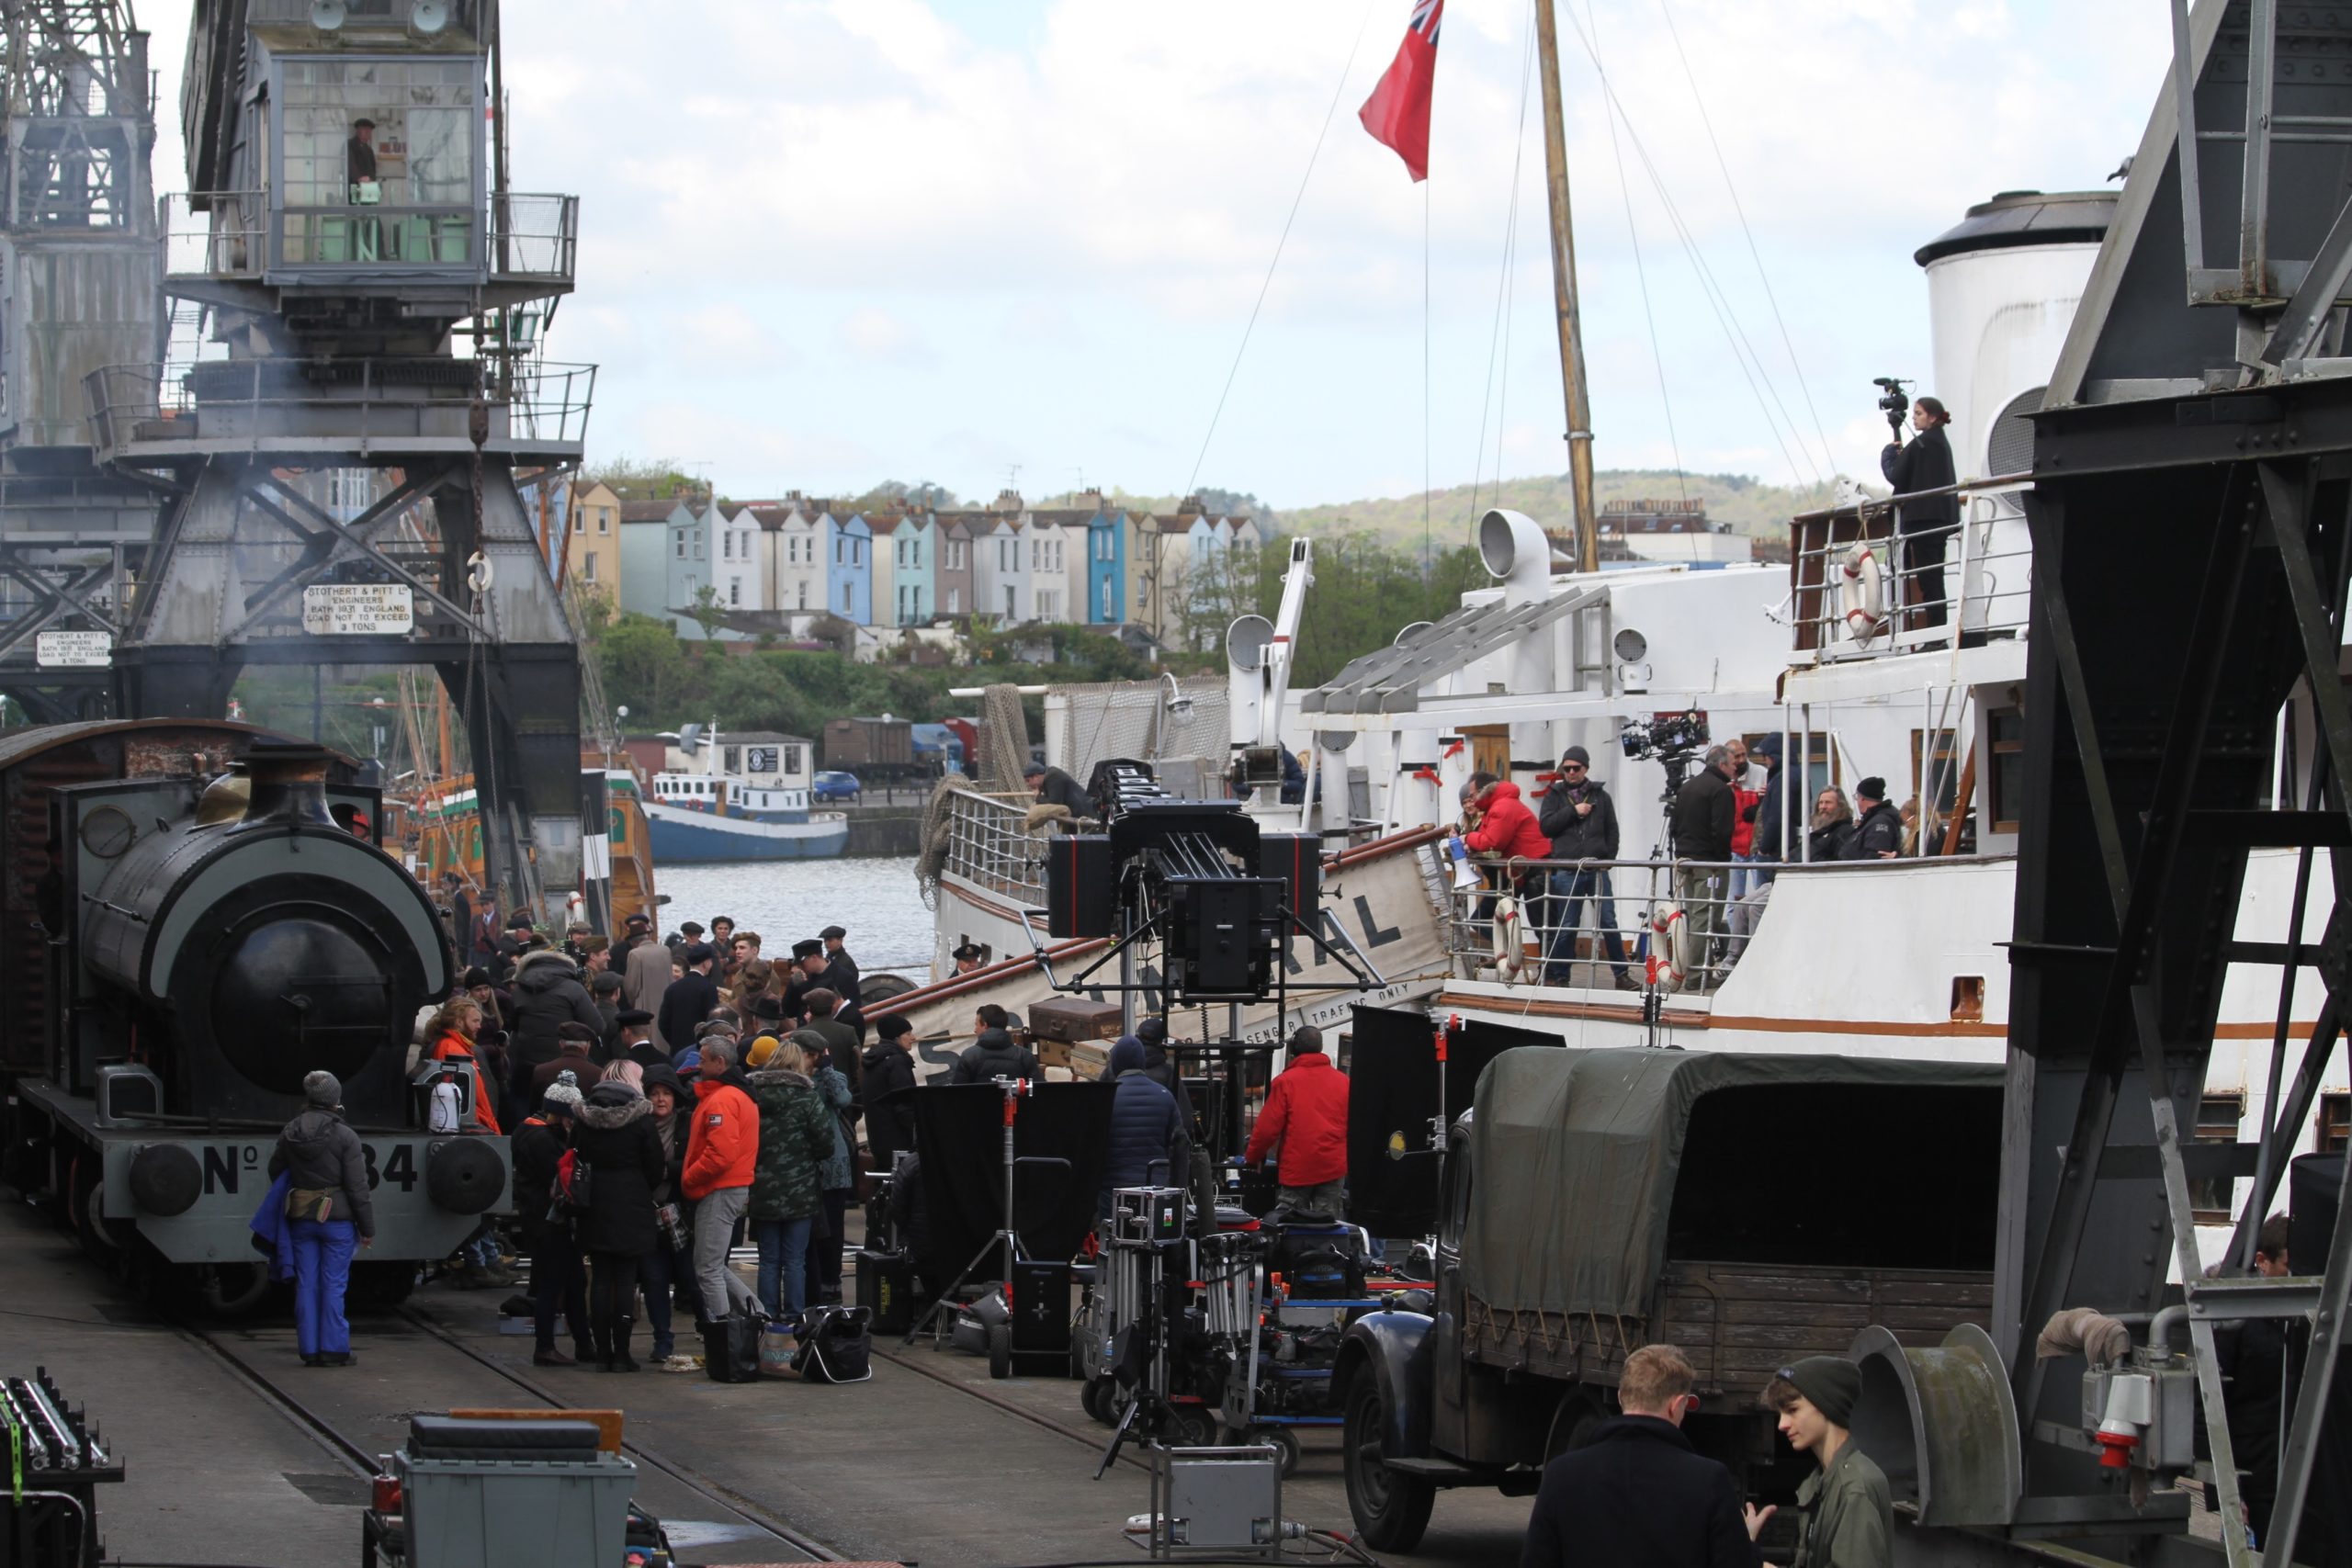 Filming on Bristol Harbour